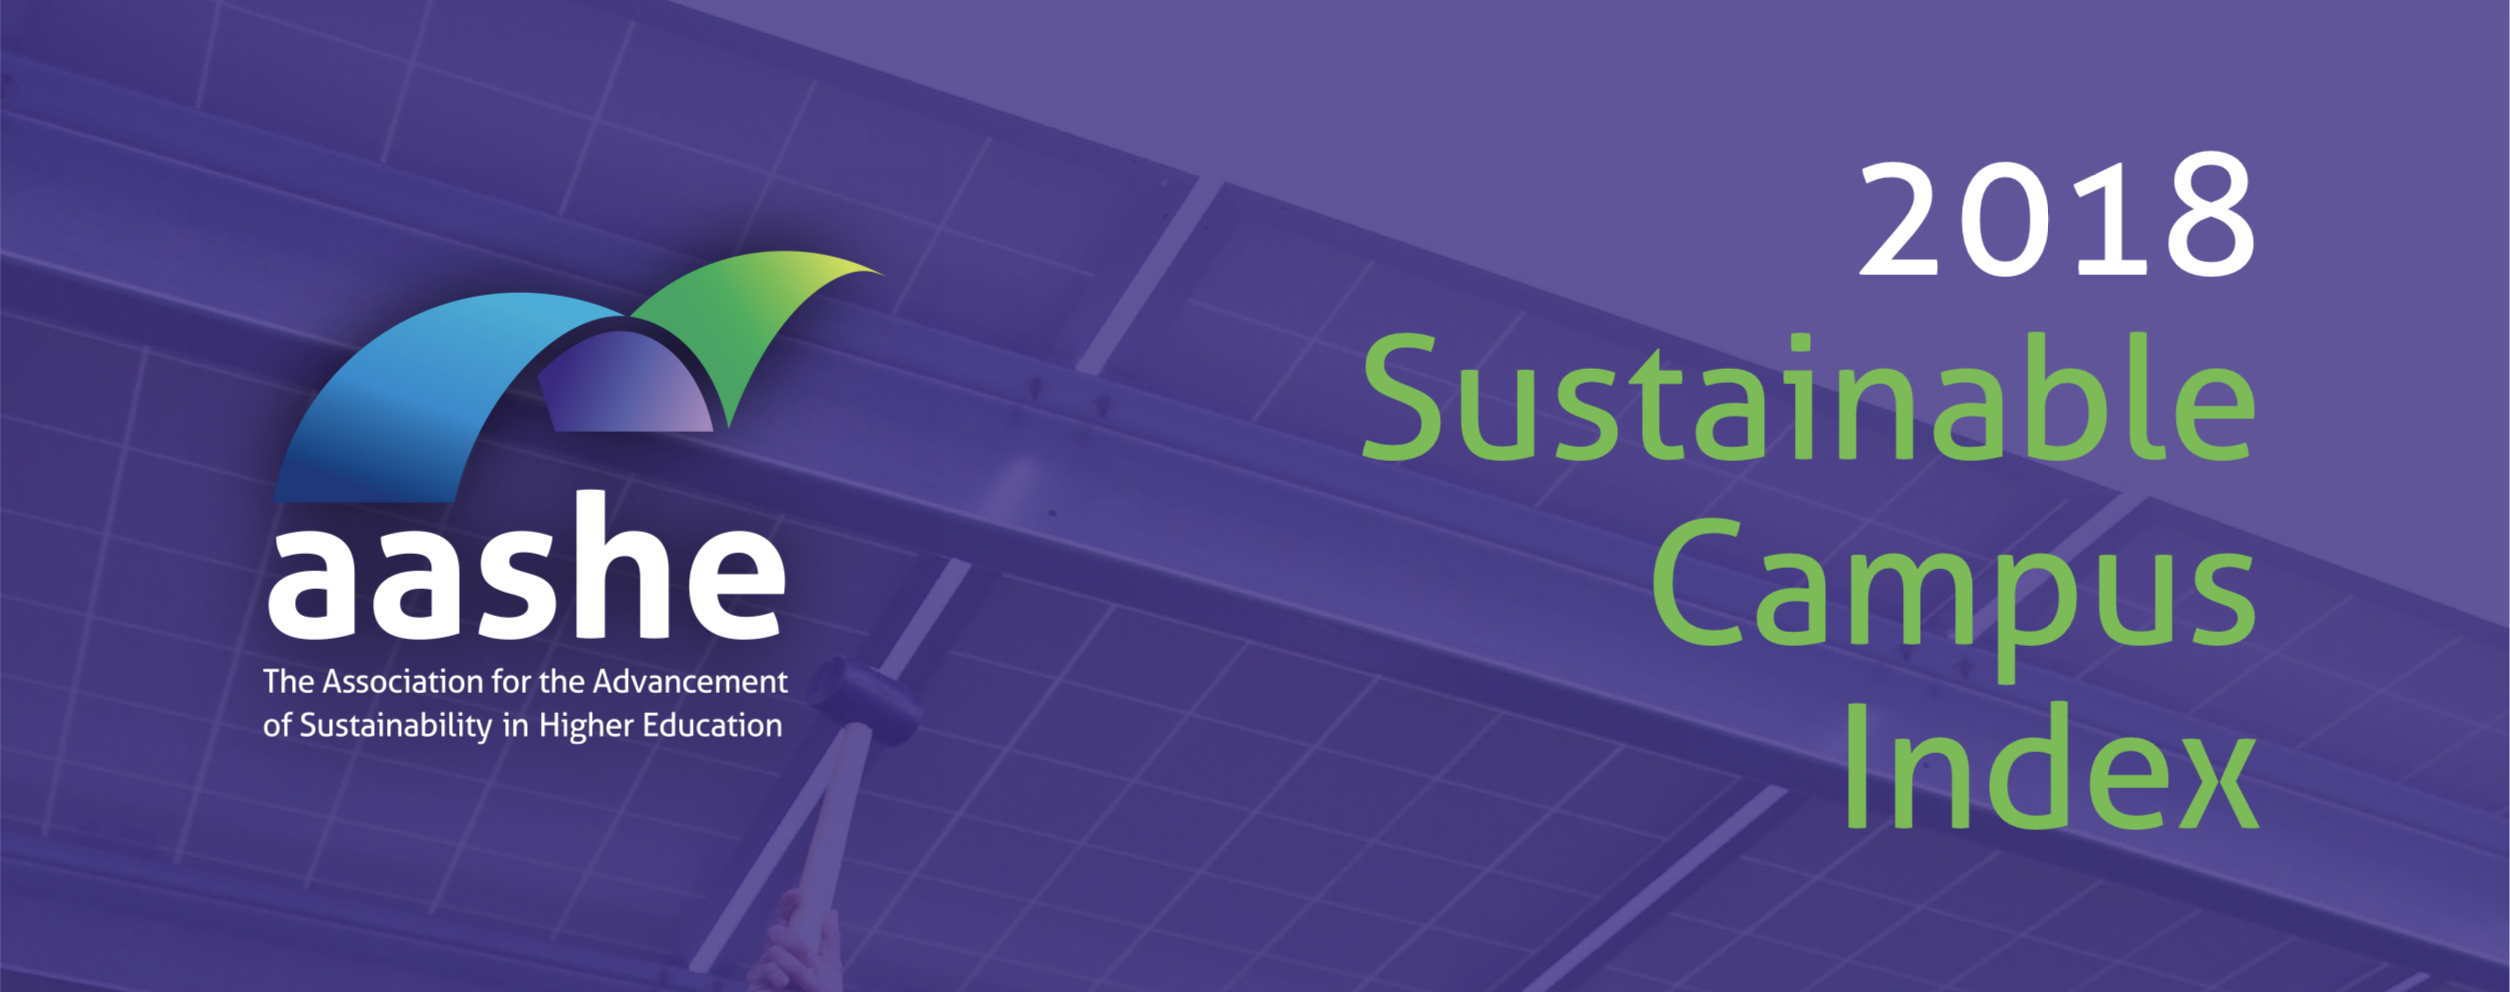 AASHE 2018 Sustainable Campus Index